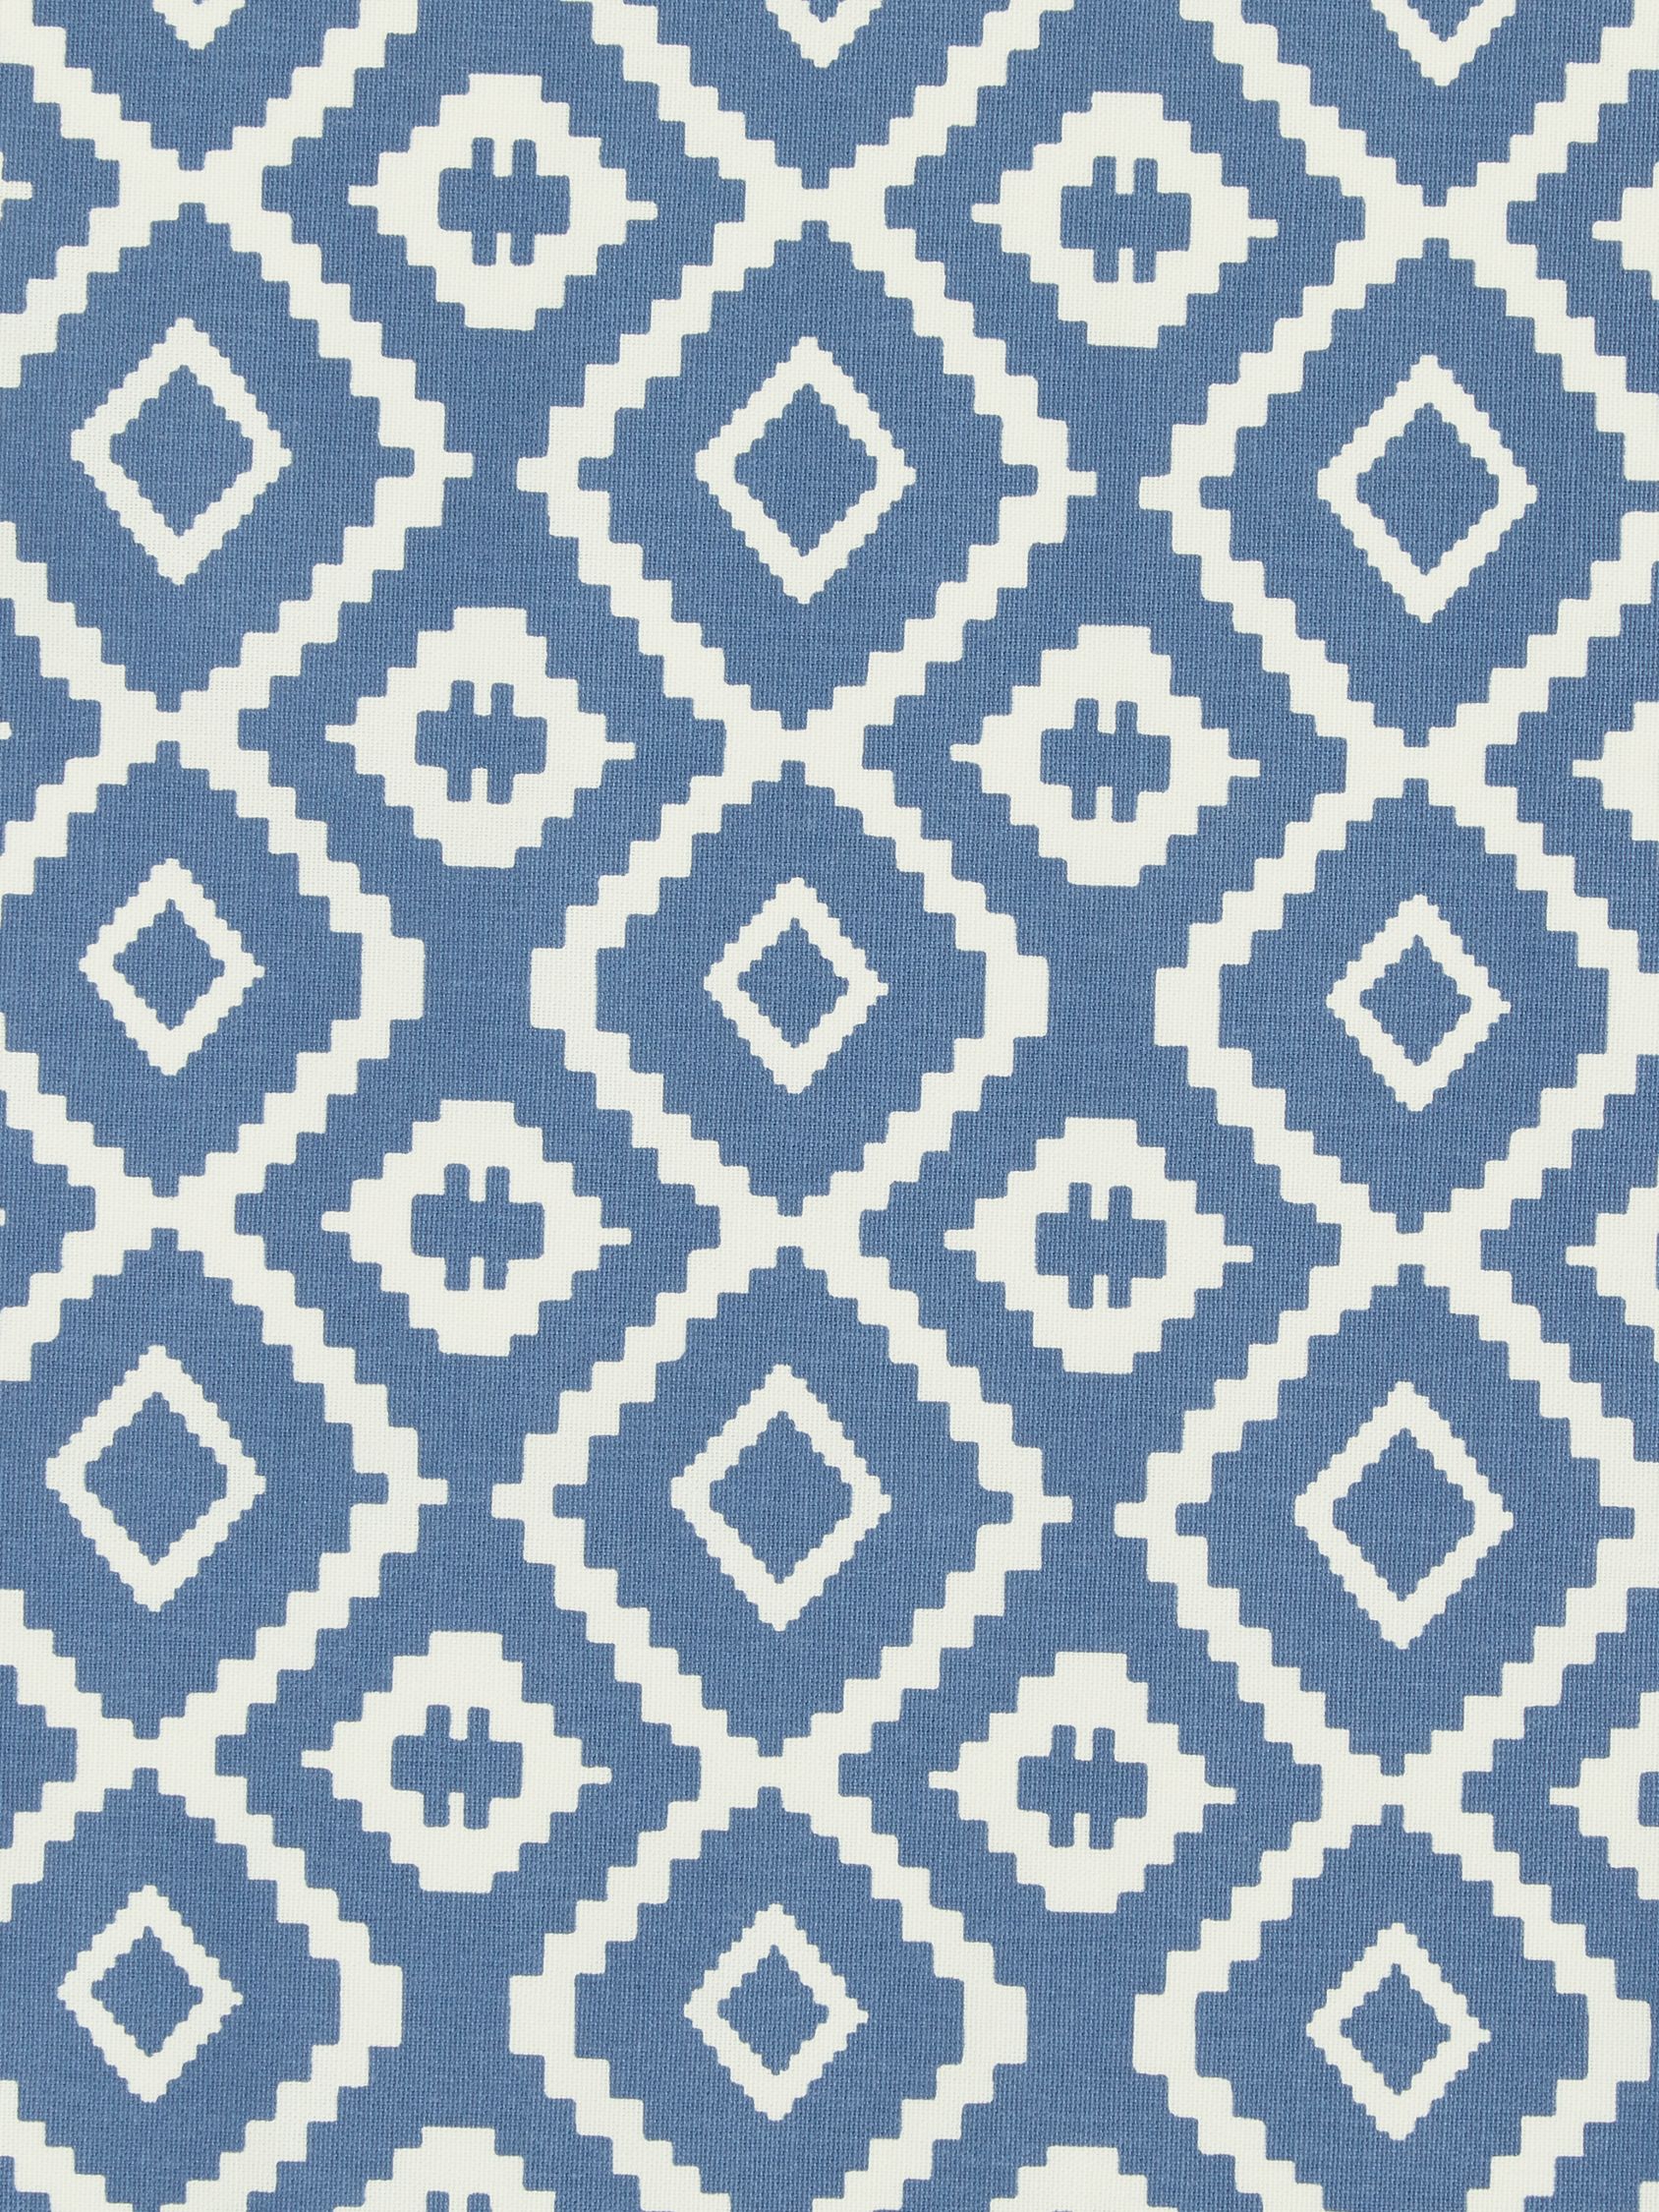 John Lewis Nazca PVC Tablecloth Fabric, Indian Blue